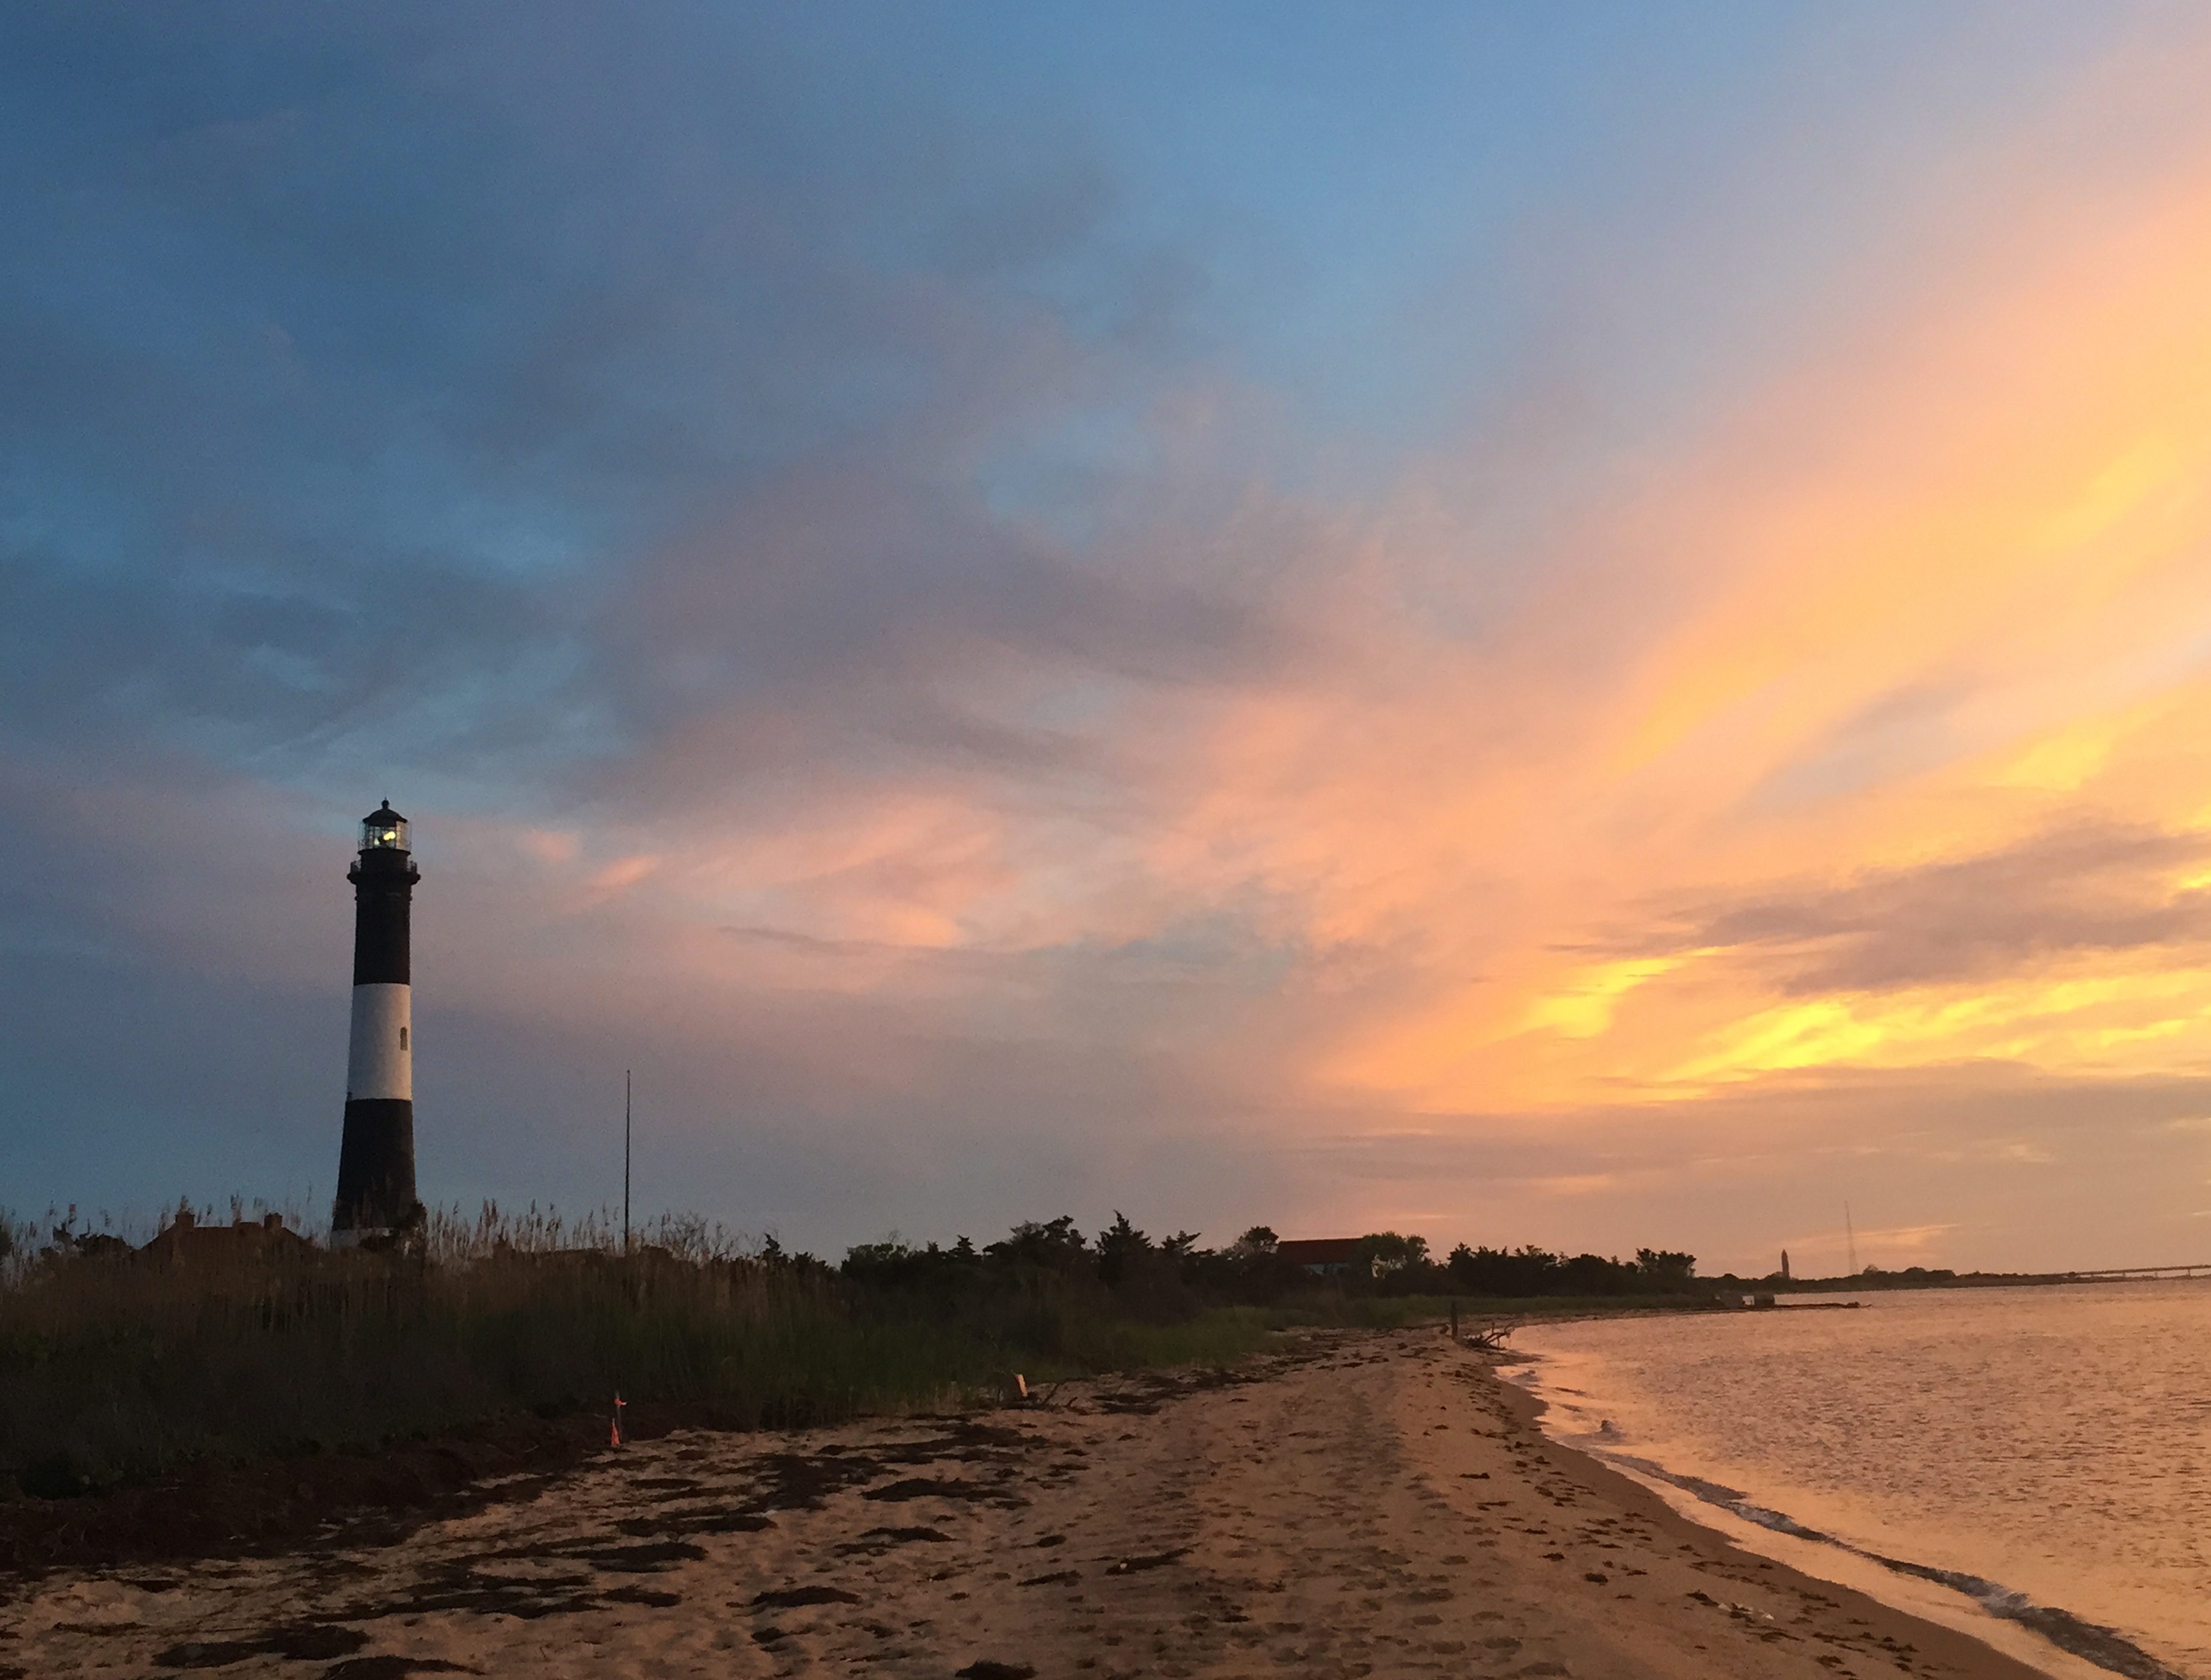 The Fire Island Lighthouse against a vibrant sunset.